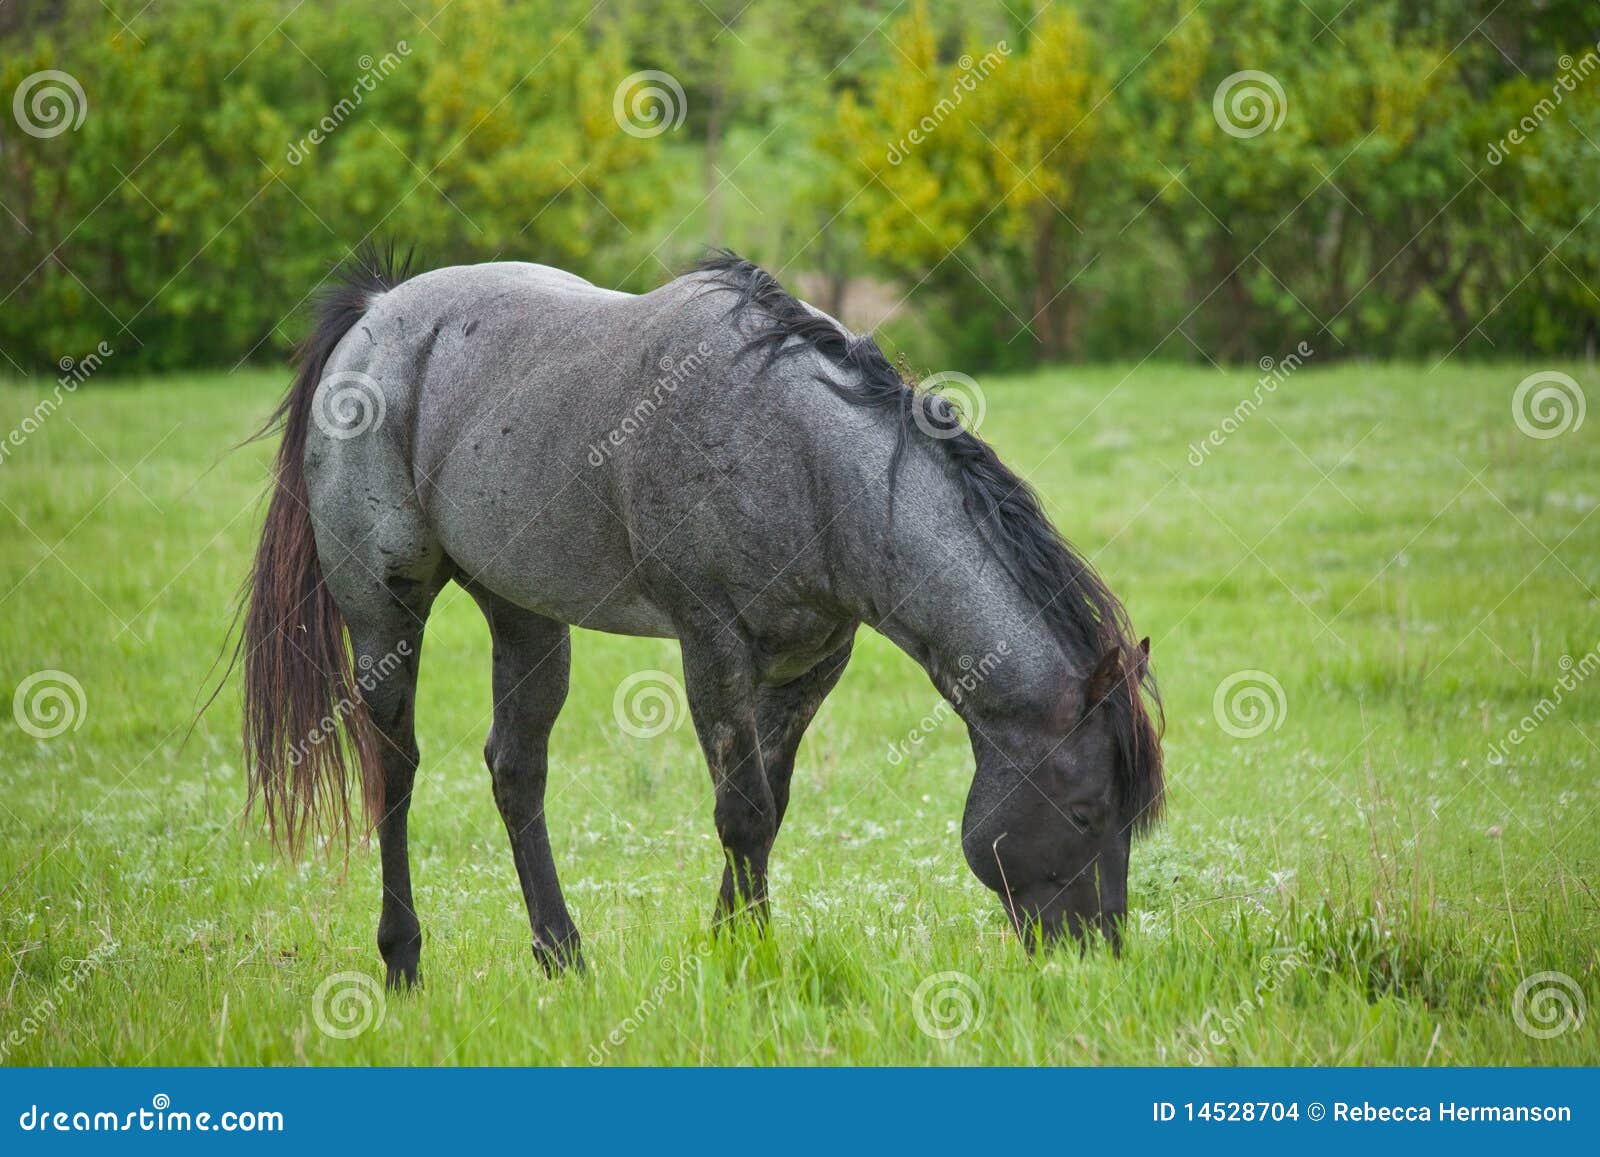 blue roan quarter horse stud